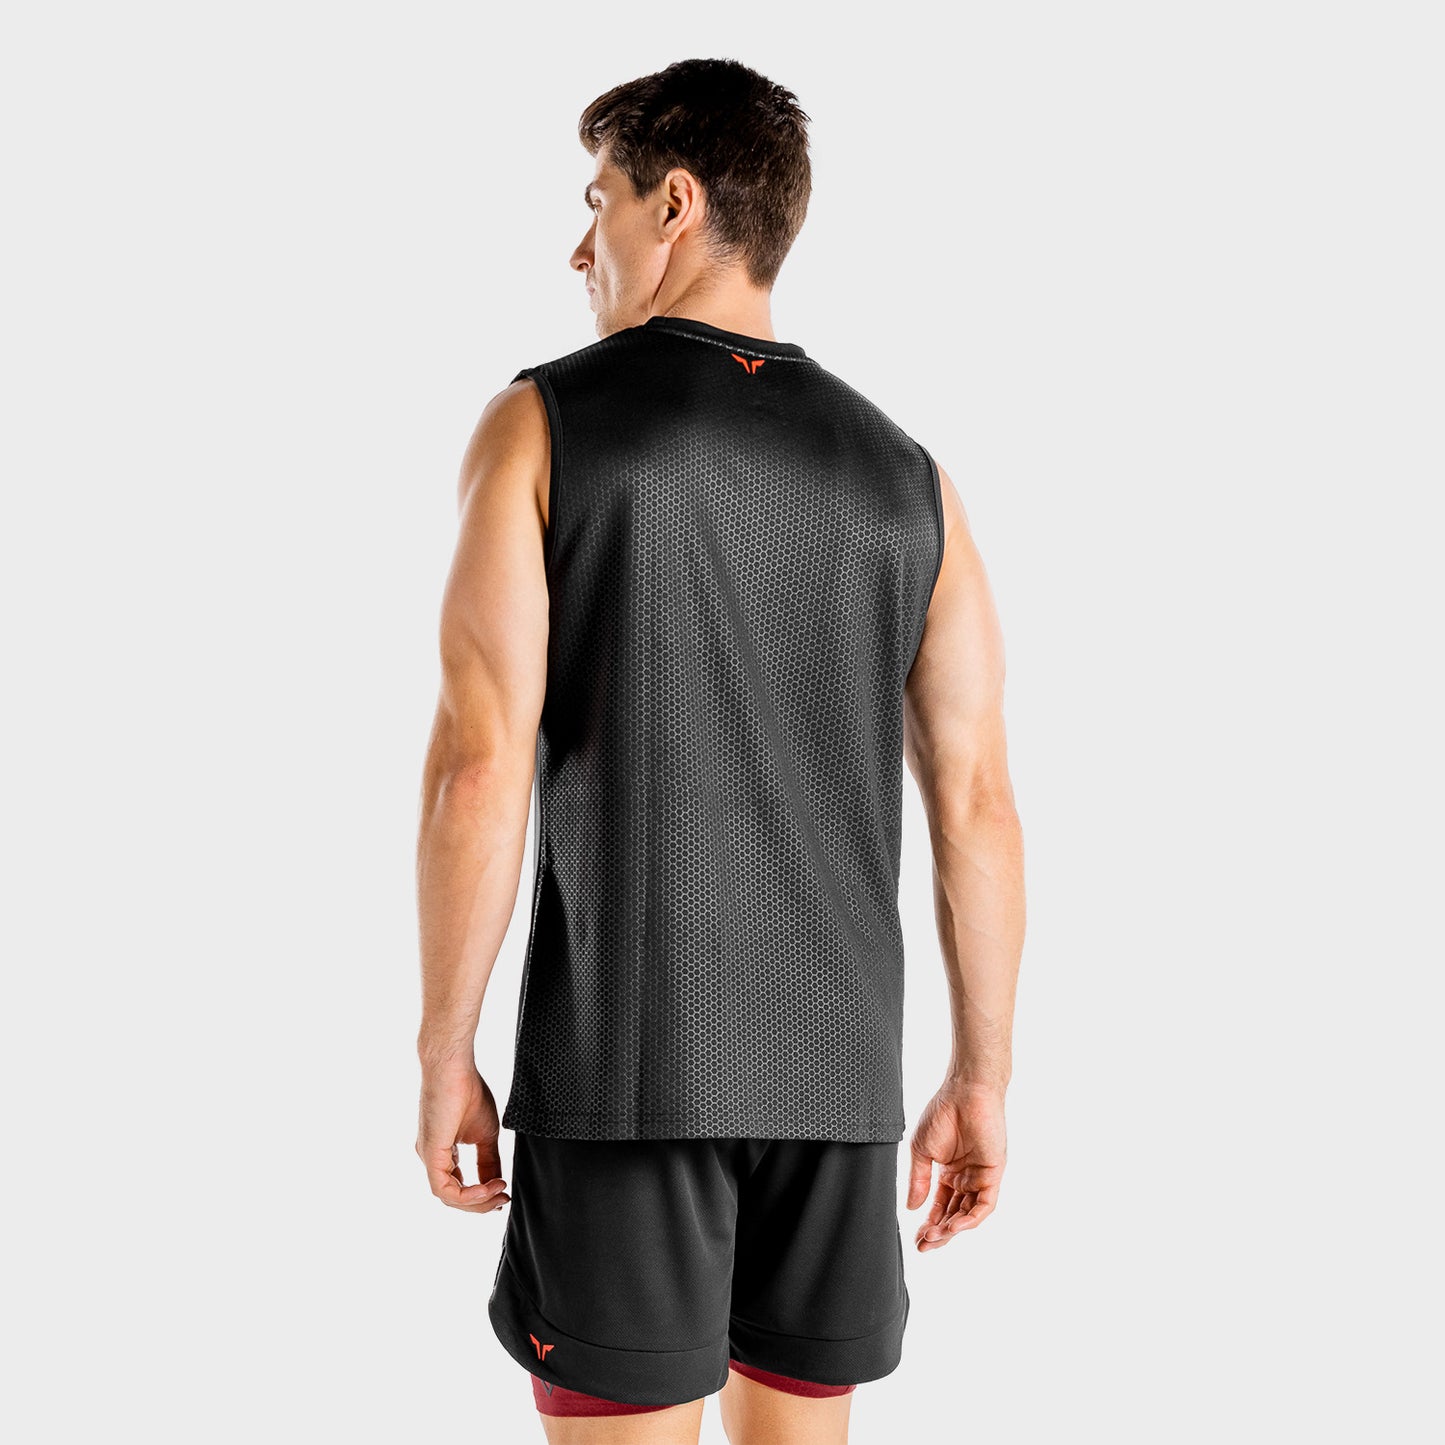 squatwolf-workout-tank-tops-for-men-superman-gym-tank-black-gym-wear